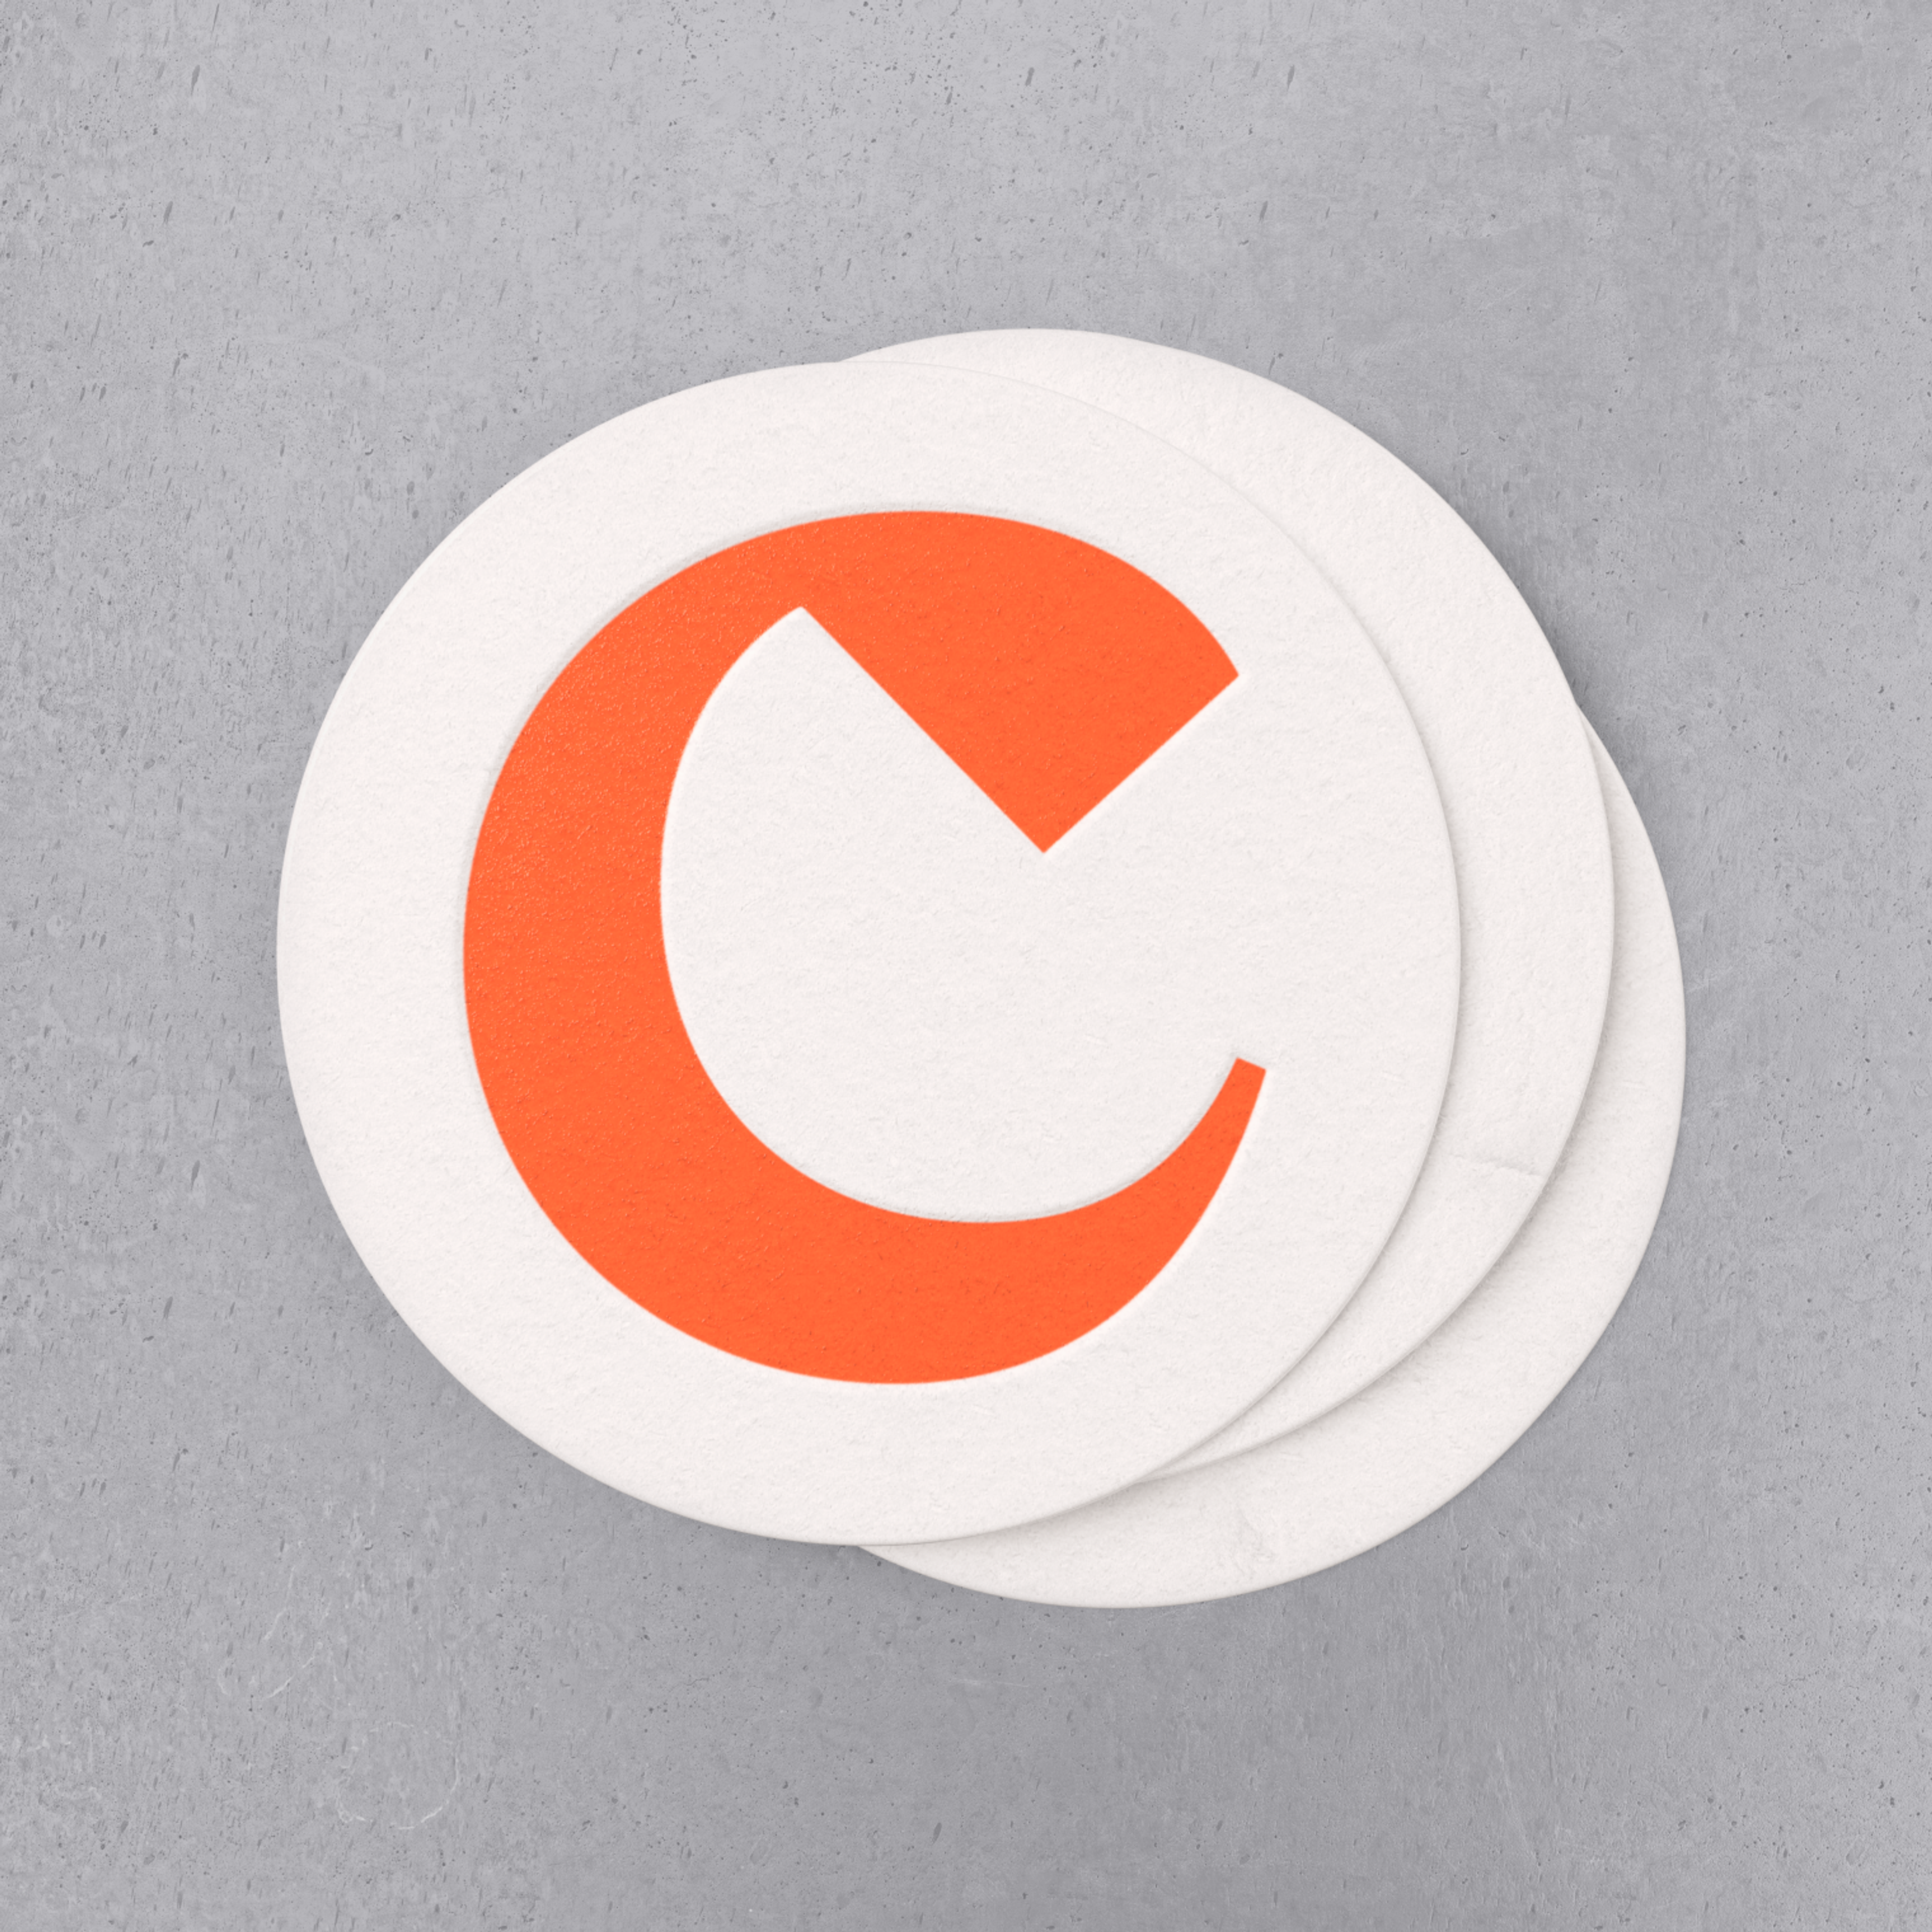 CafePay logo on a coaster